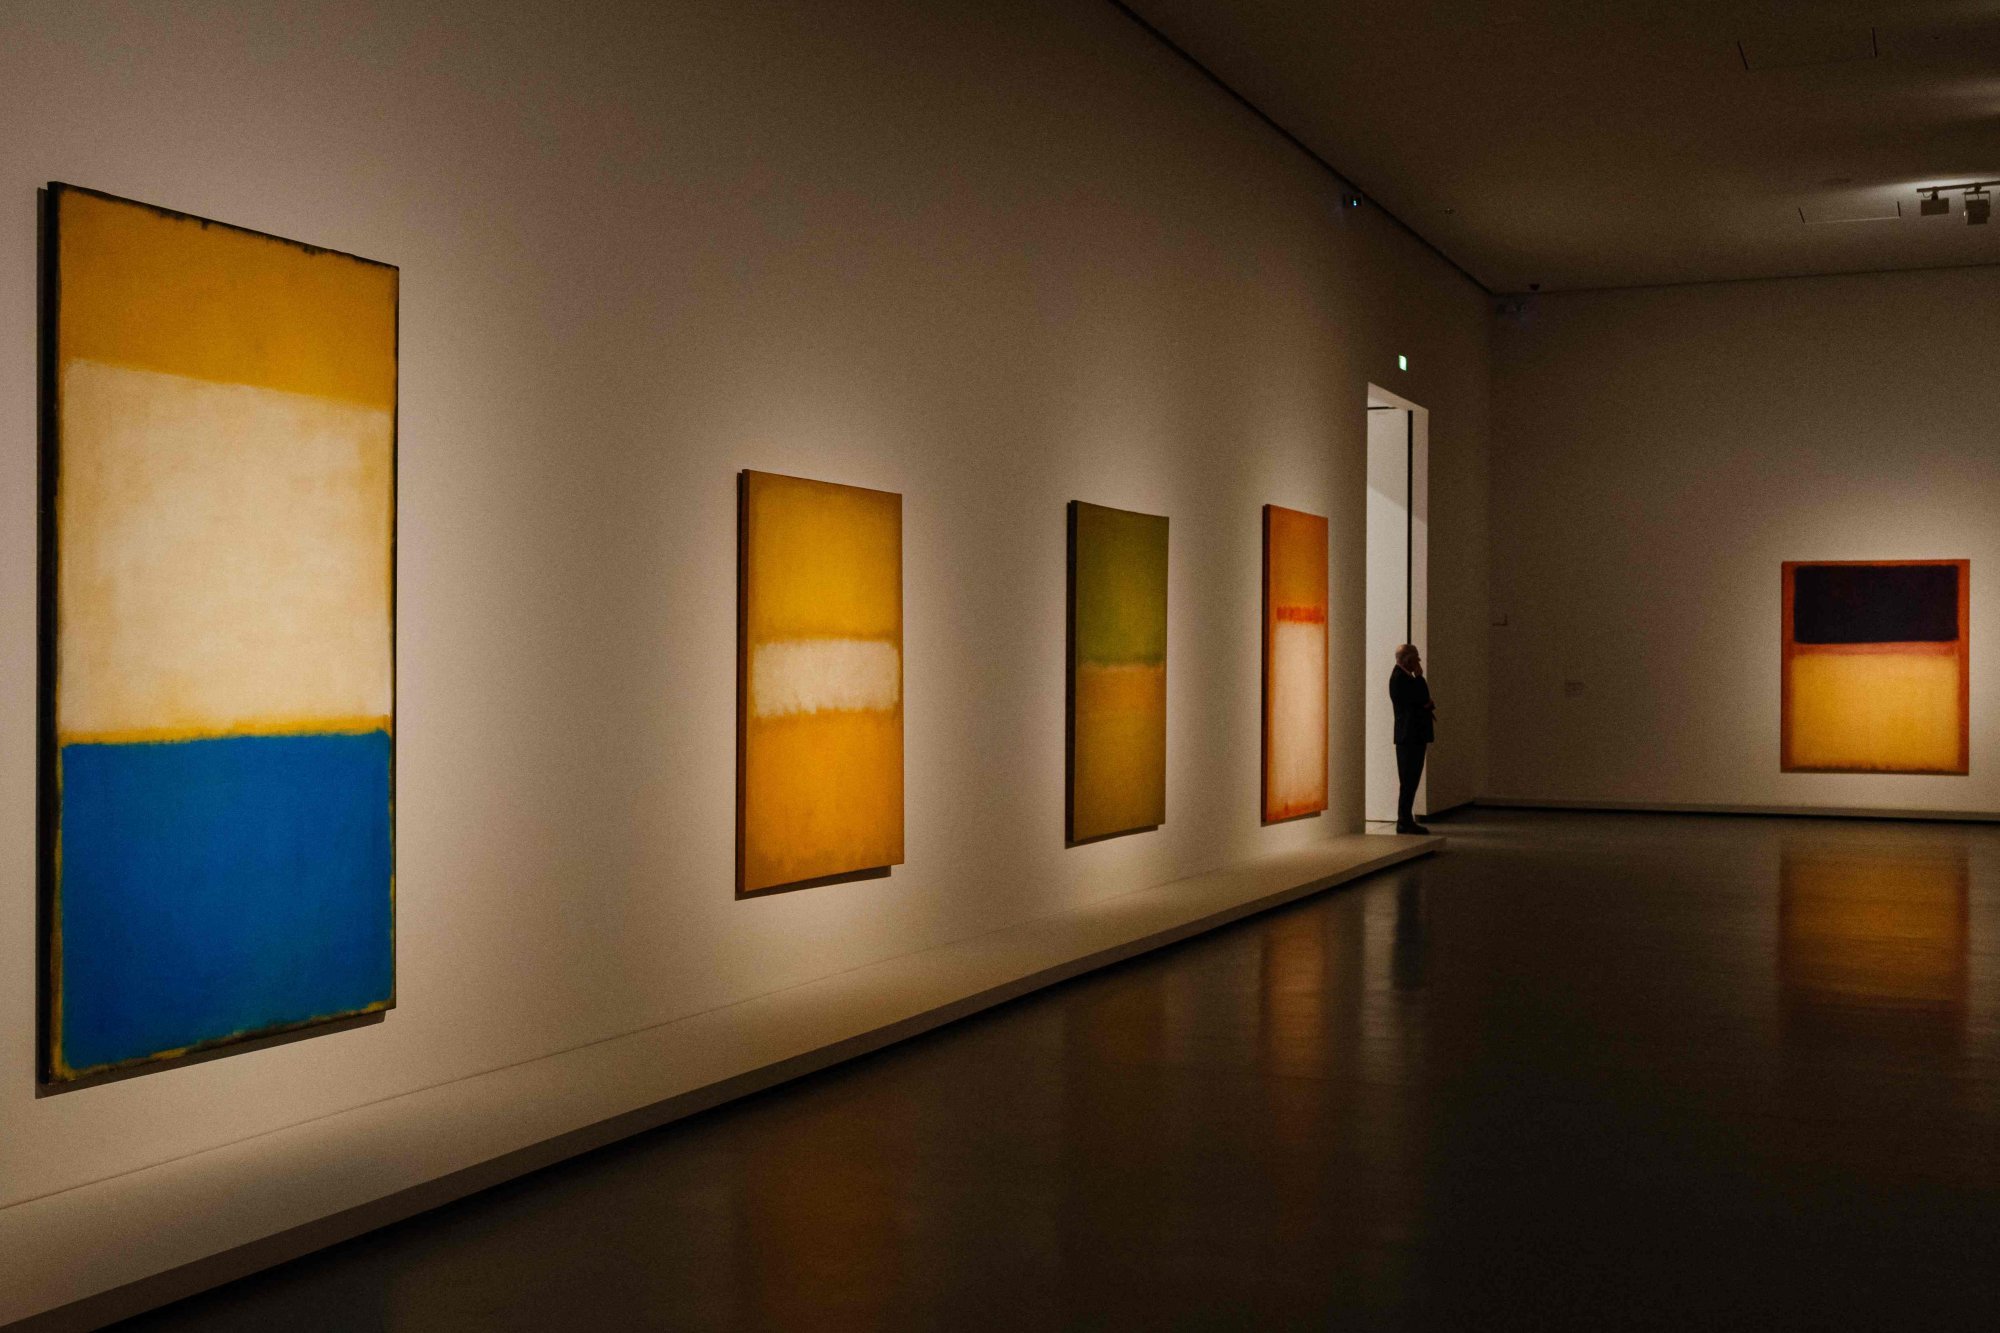 Mark Rothko exhibition at Fondation Louis Vuitton, Paris